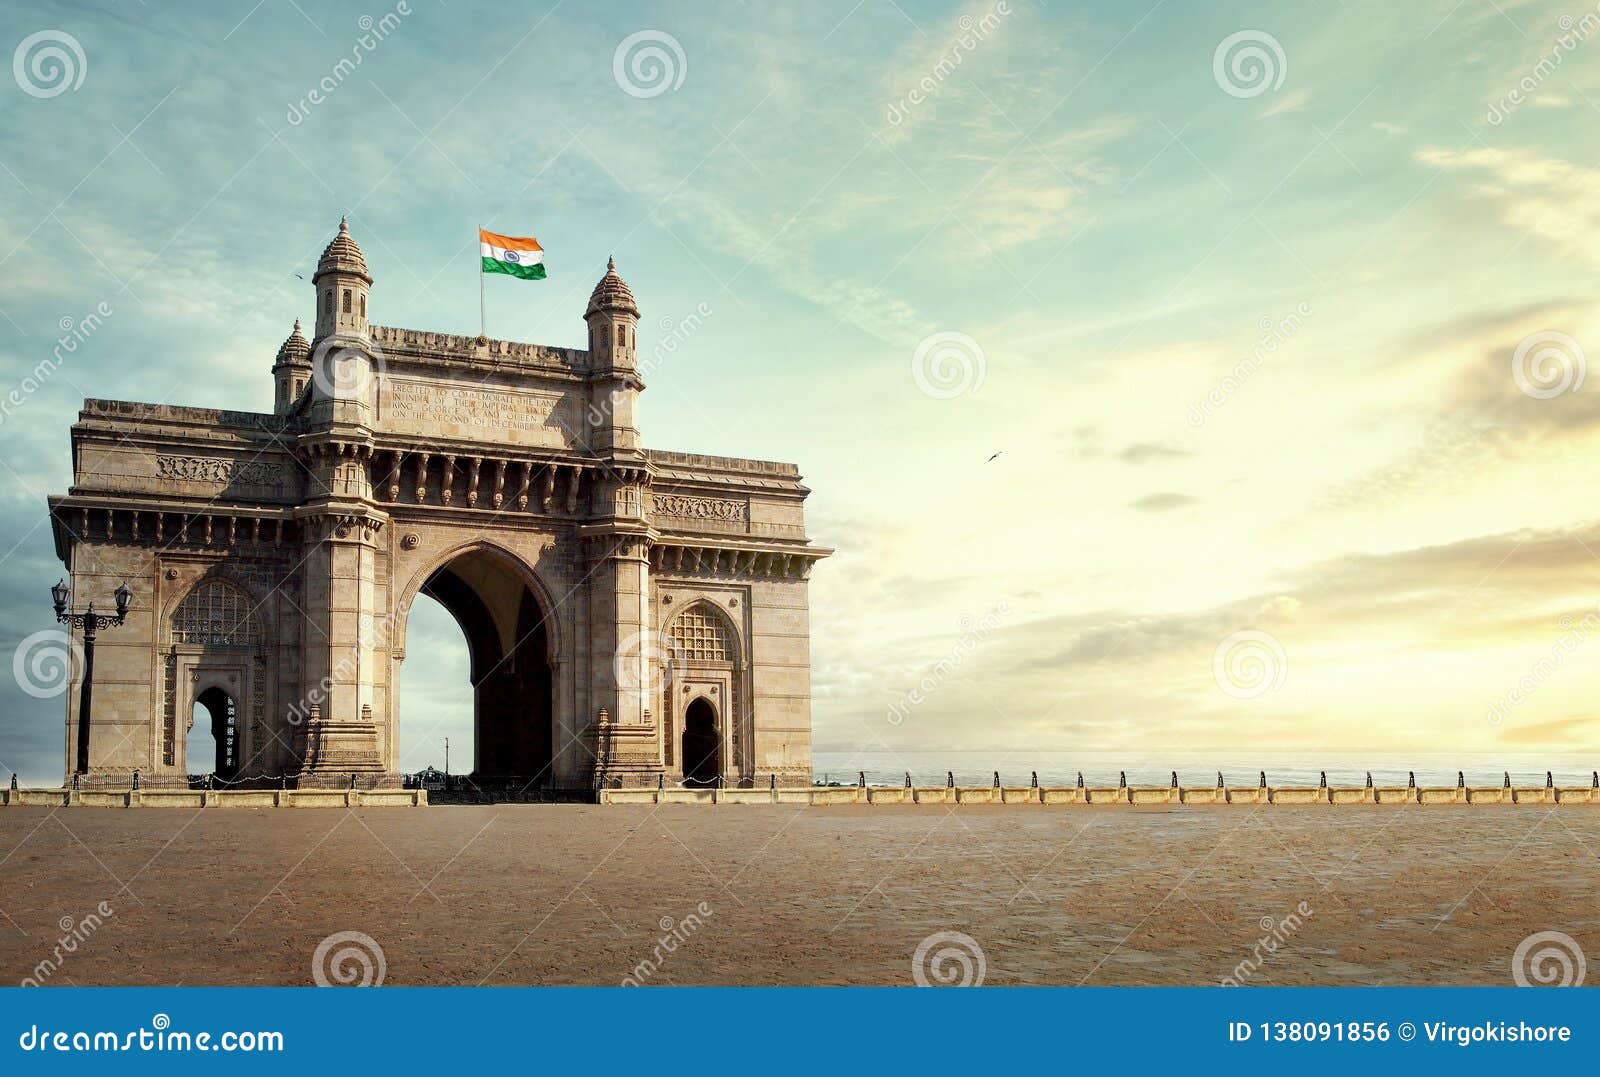 Details 300 gateway of india background